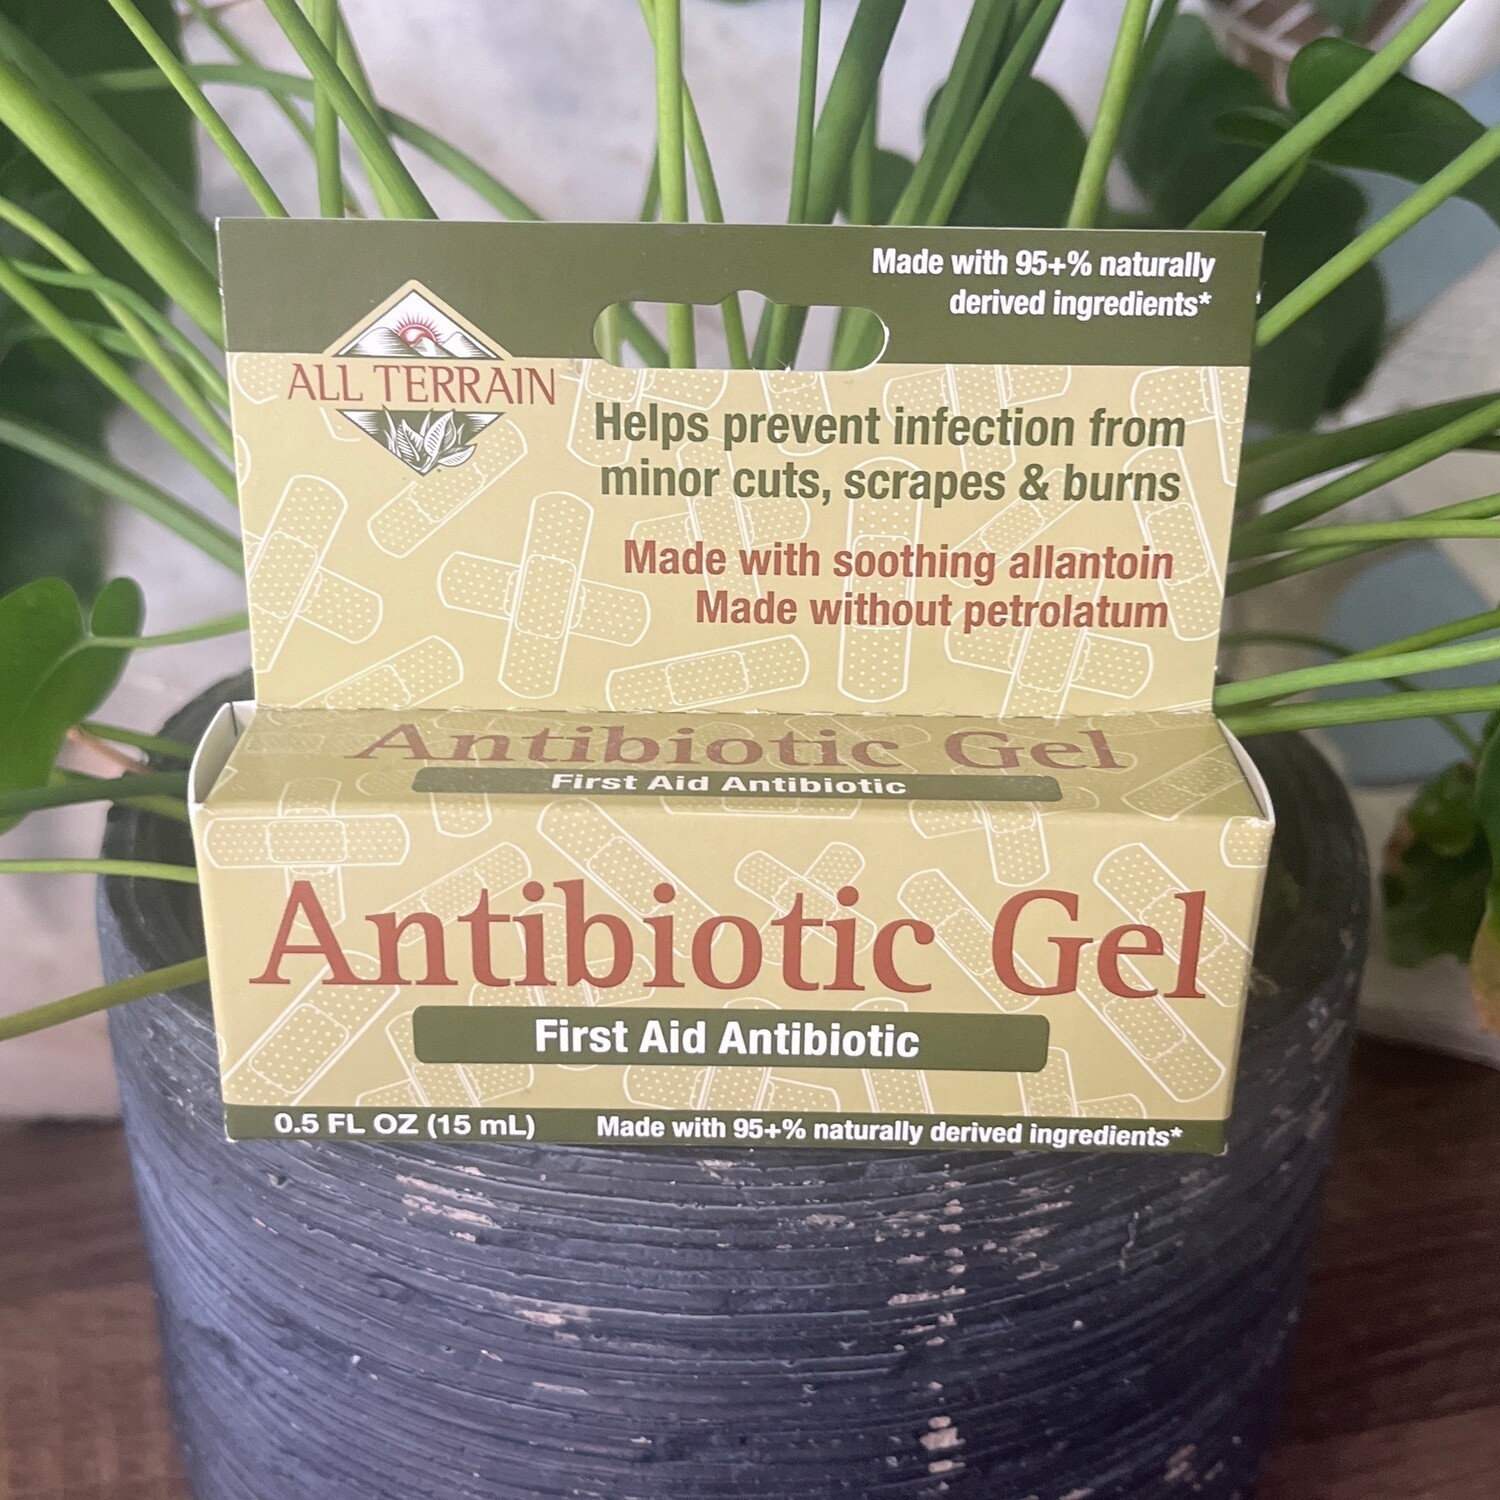 Antibiotic Gel